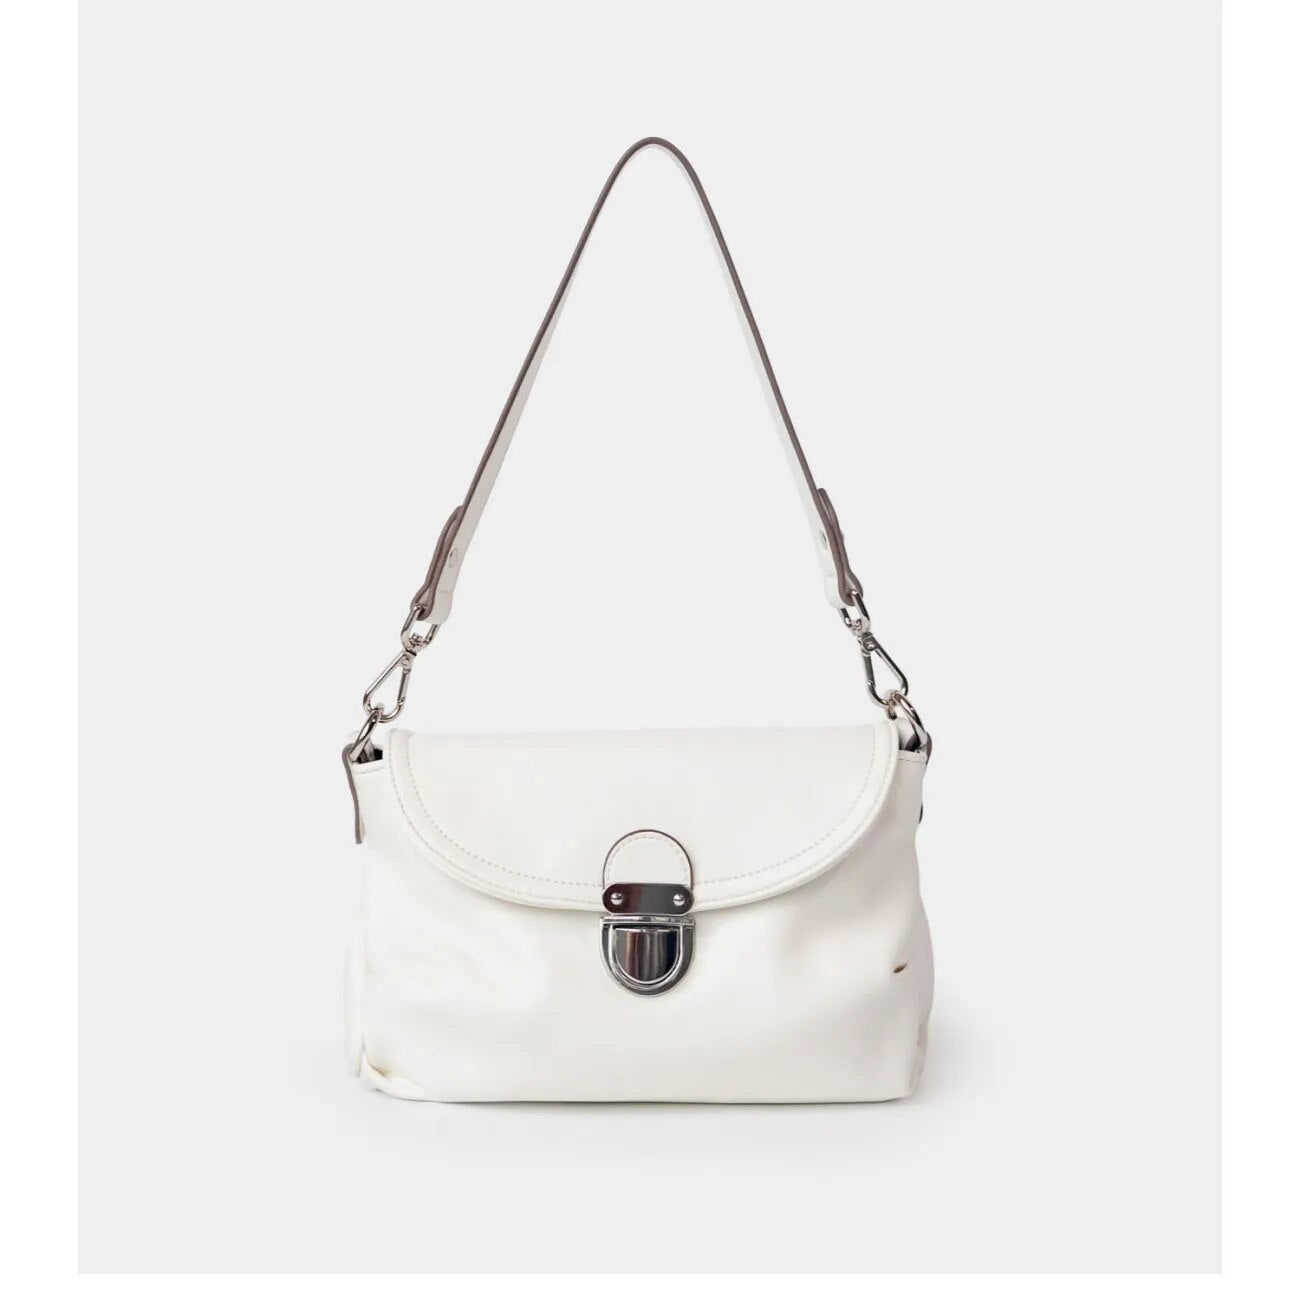 Women's Bag Fashion Portable Single Shoulder Bag Female Versatile shopping cross-body Bag